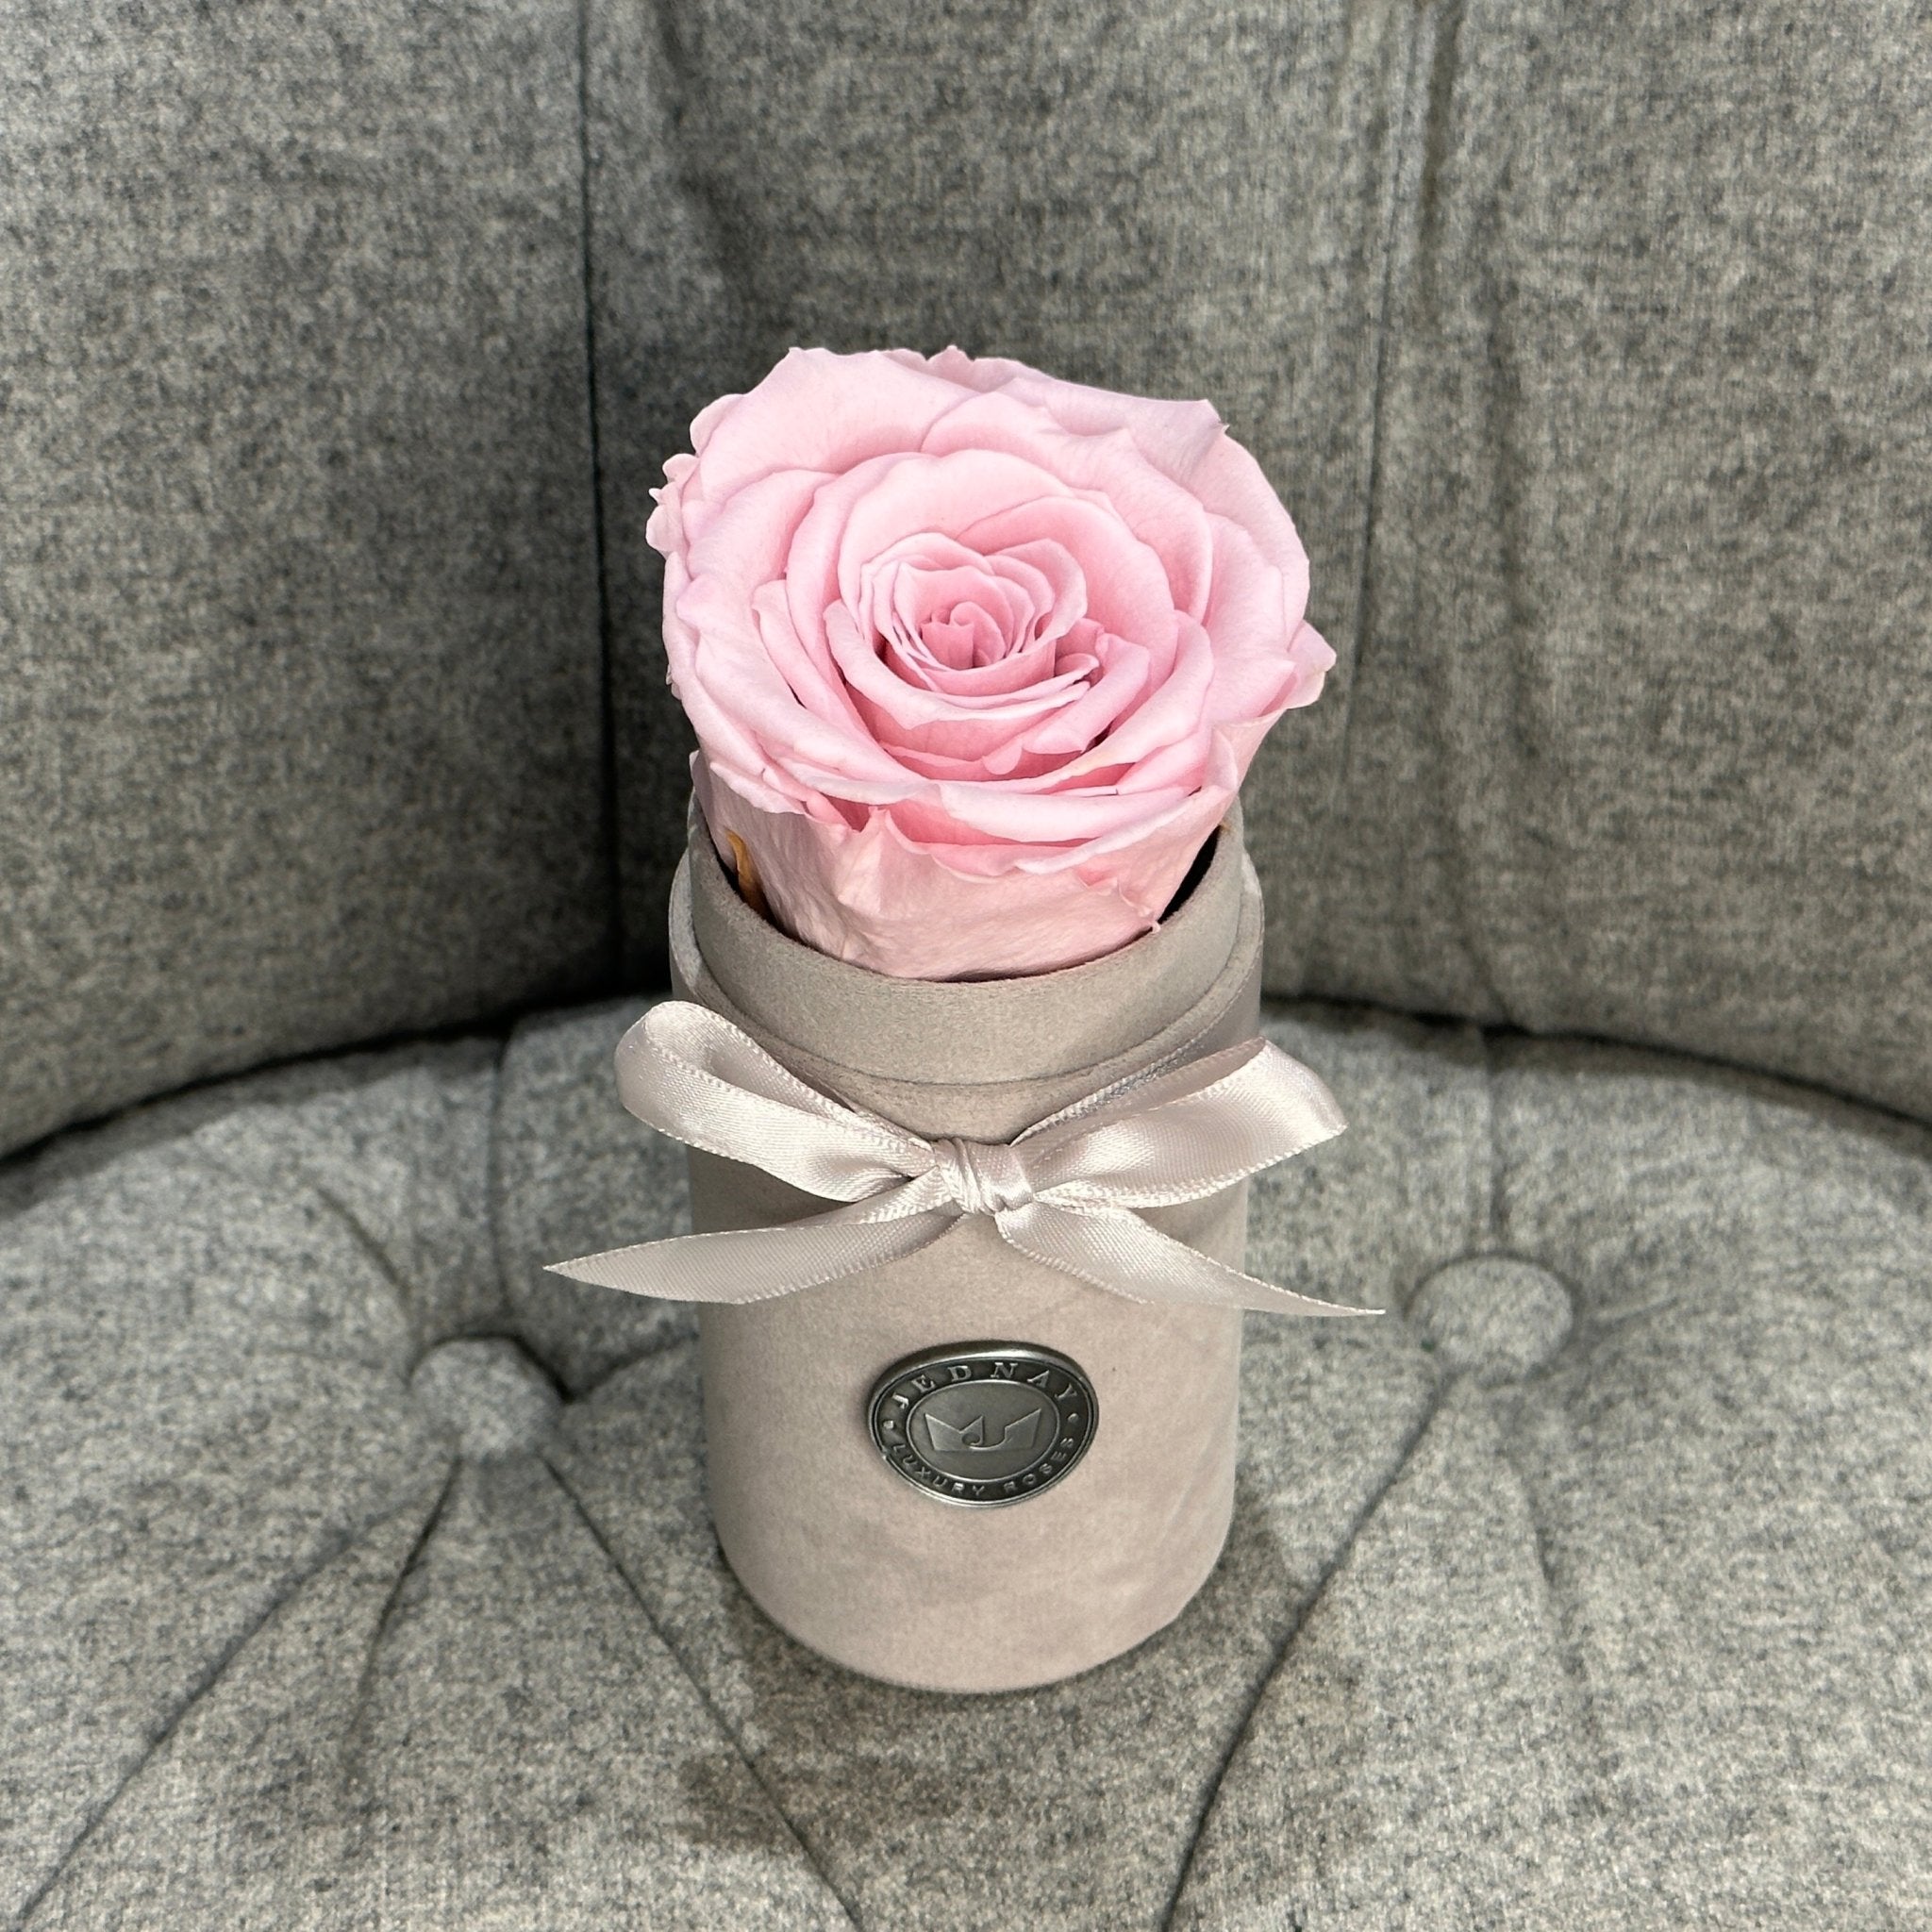 Single Grey Suede Forever Rose Box - Soft Pink Eternal Rose - Jednay Roses